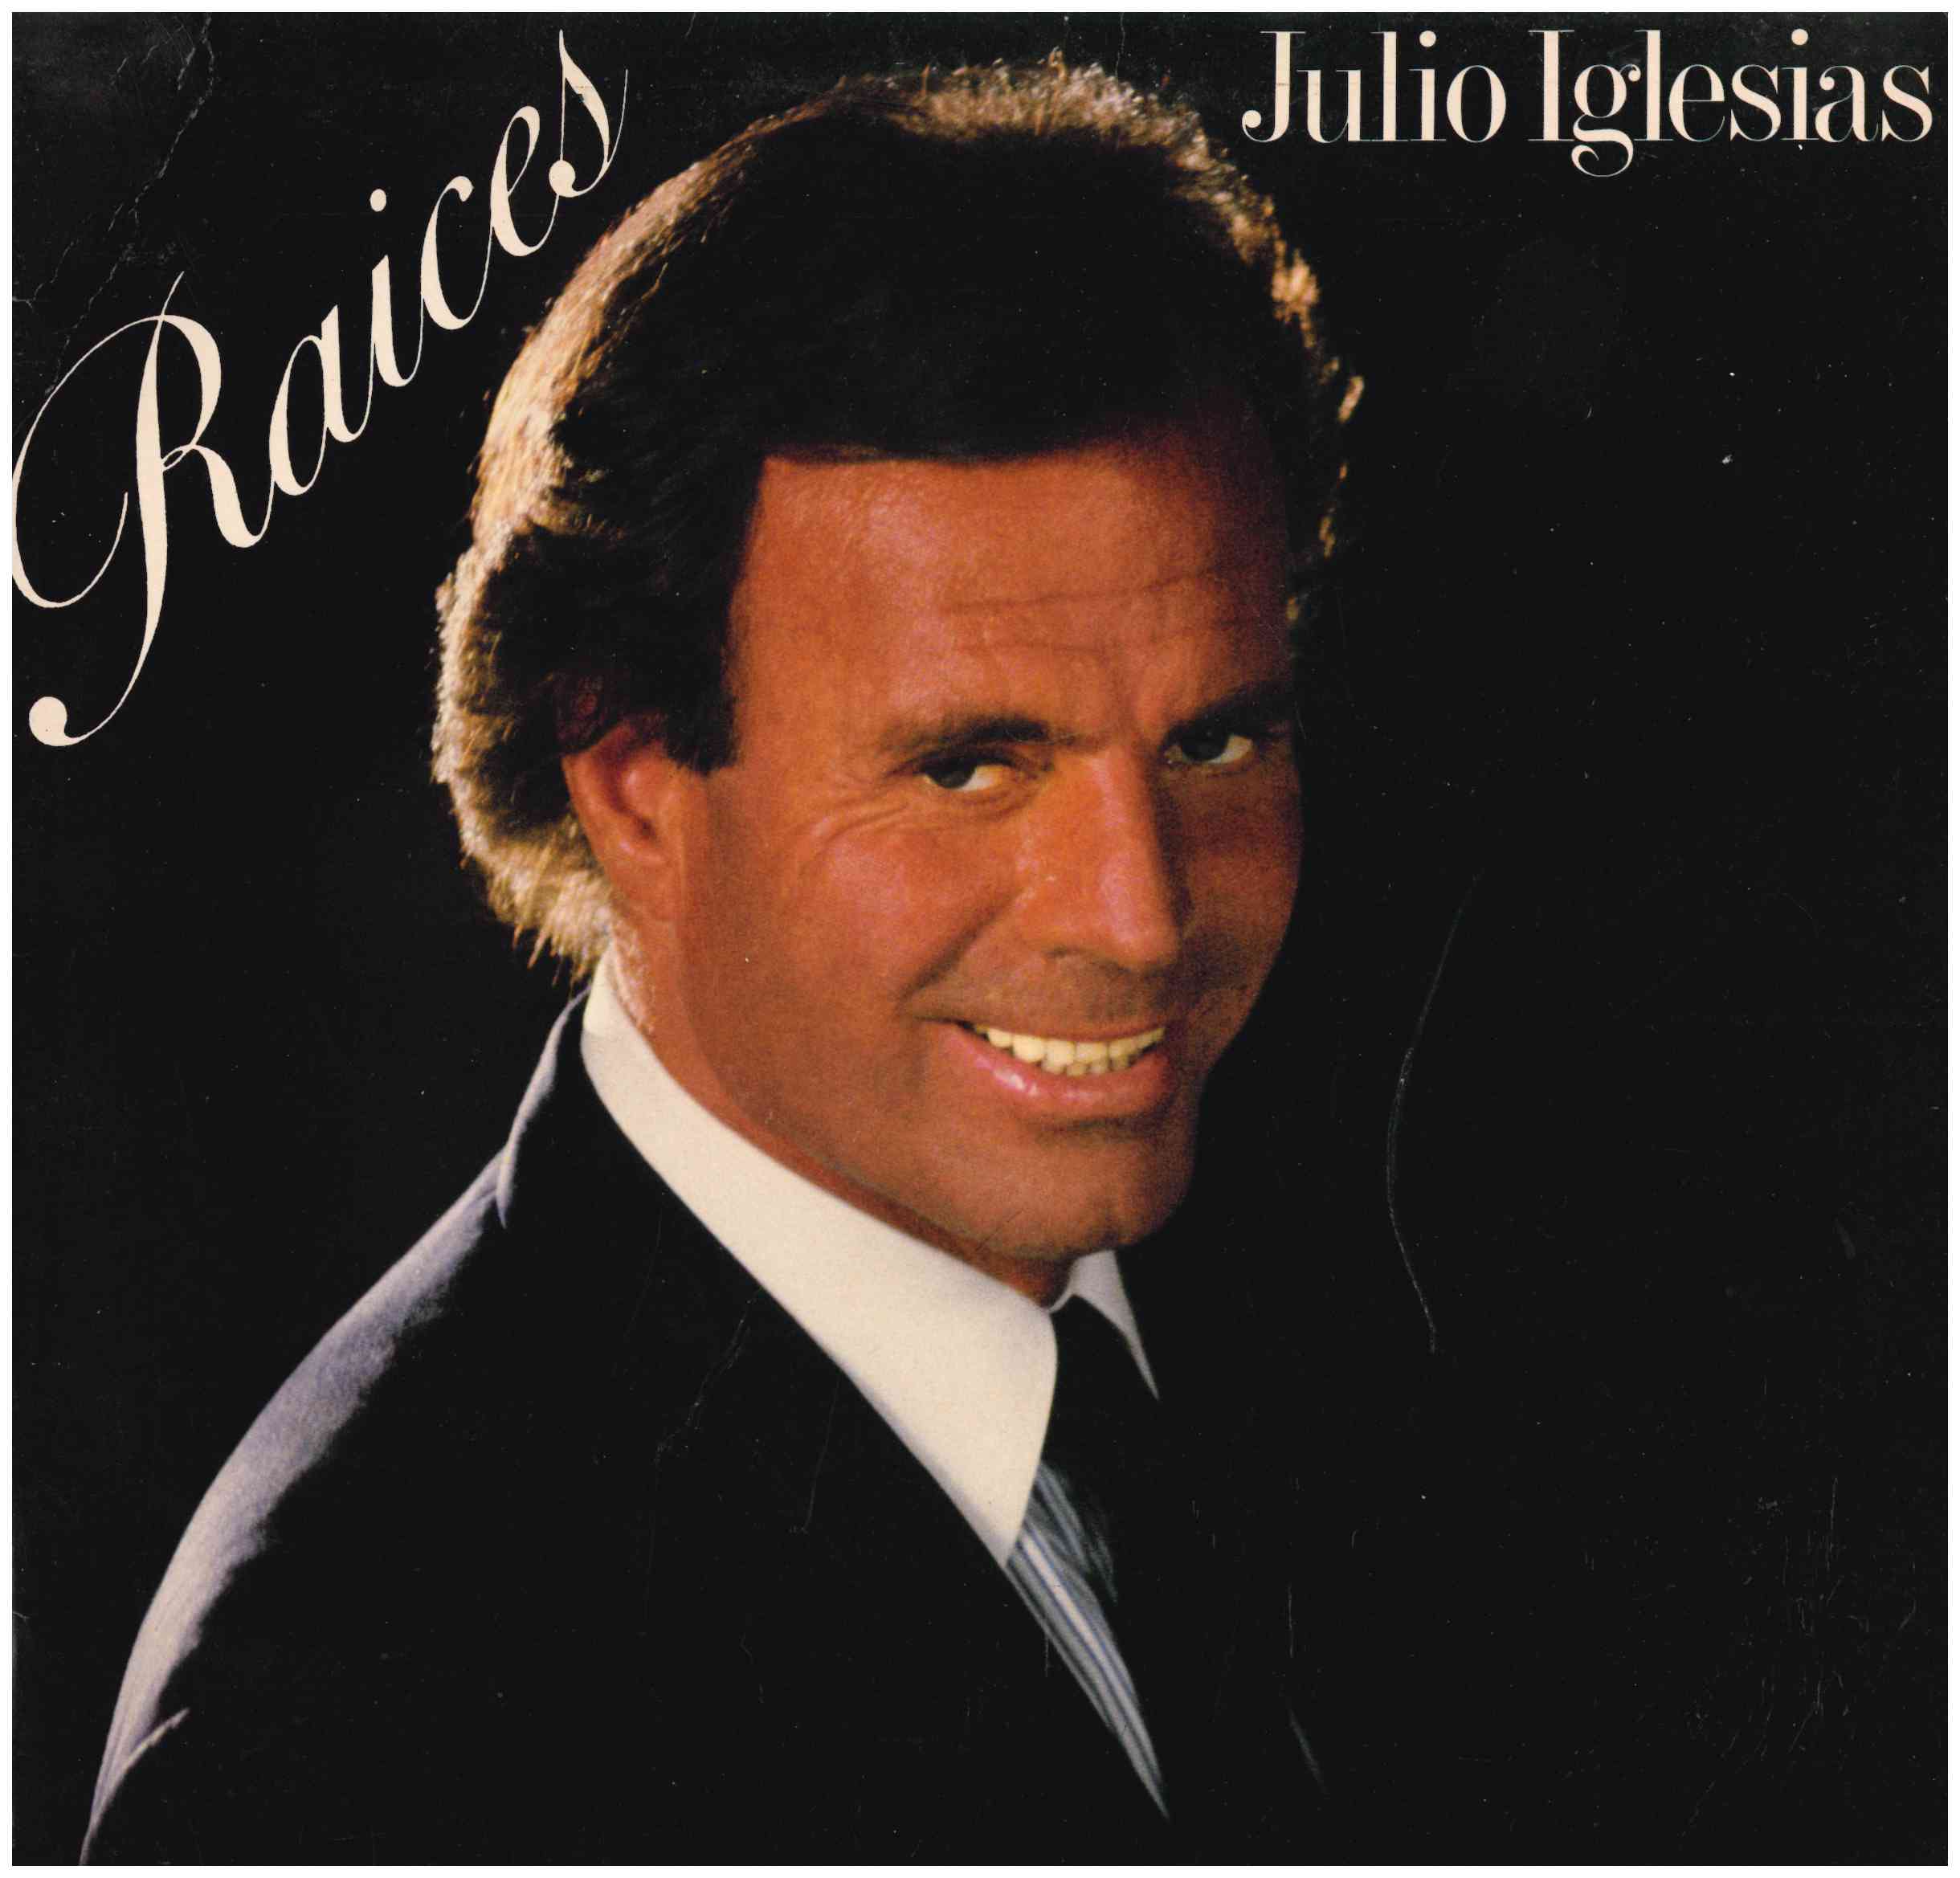 Julio Iglesias. Raices. CBS 1989 (465316 1)